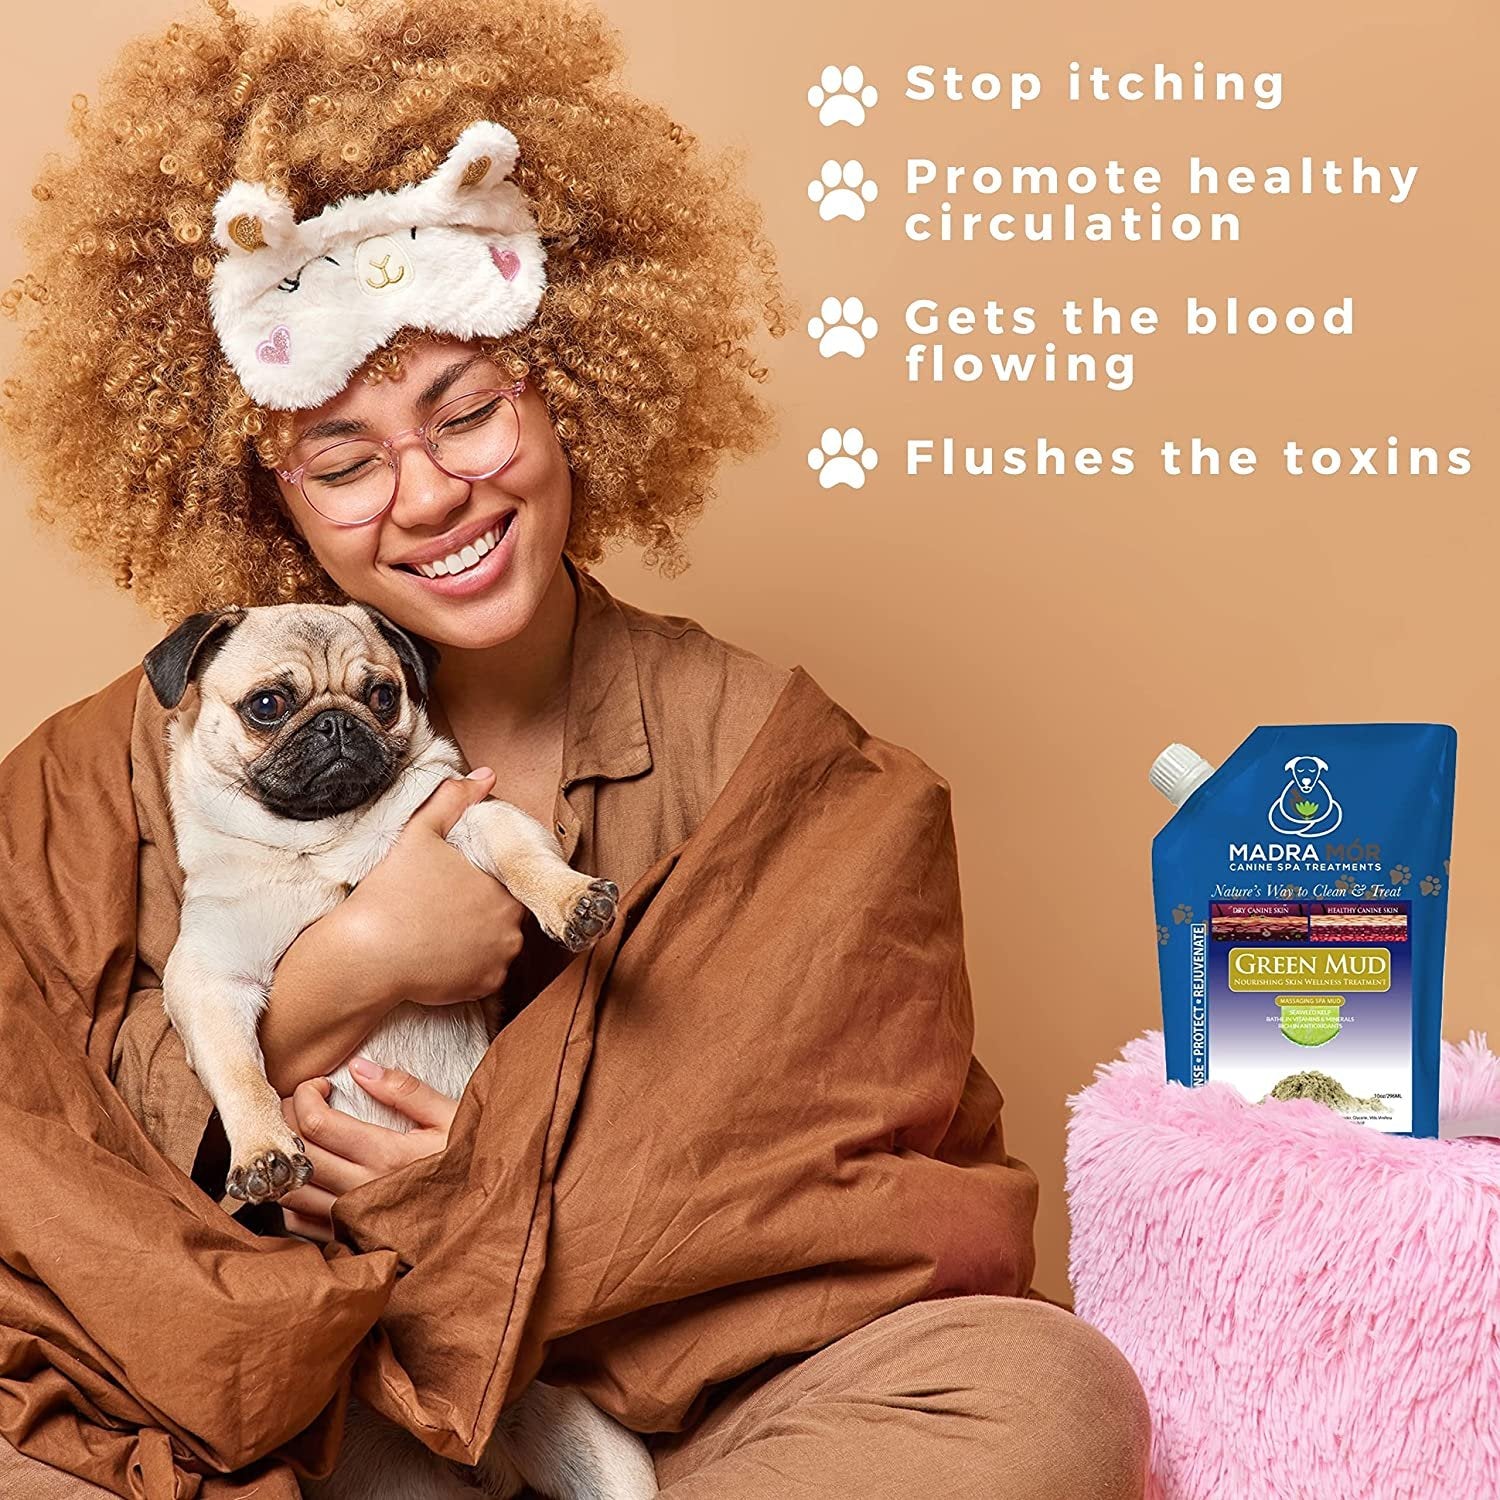 Madra Mor Massaging SPA Mud - Luxurious Dog Skin Wellness Treatment - Cleanse - Protect - Rejuvenate - Green Mud - 1 Pack (10oz) - with Multi-Purpose Key Chain